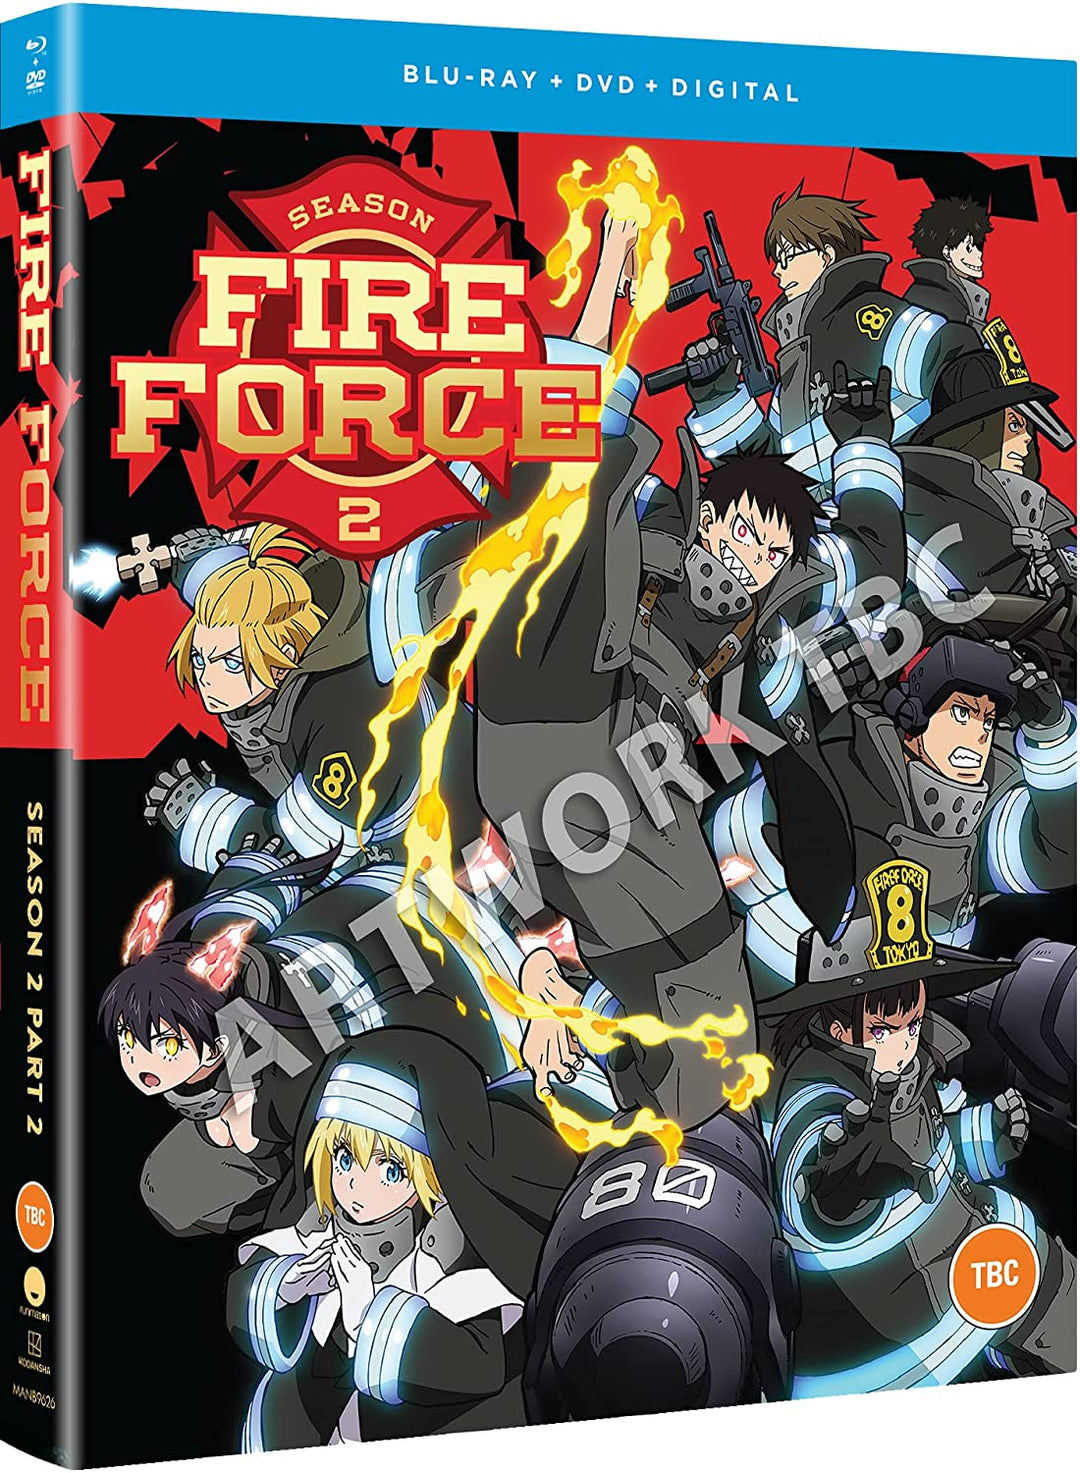 Fire Force Season 2 Part 2 - Blu-ray/DVD Combo + Digital Copy - Action [Blu-ray]